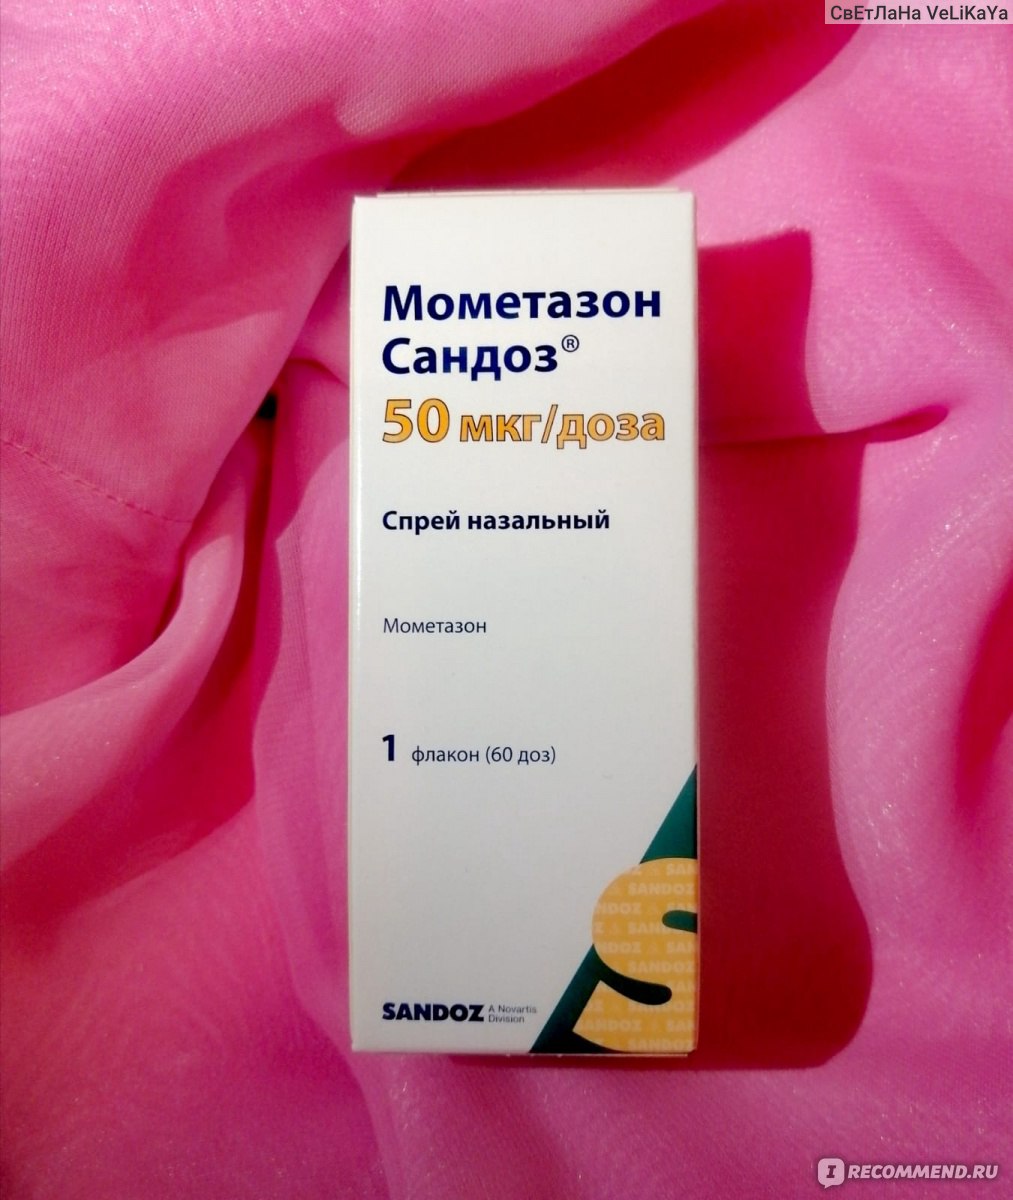 Лекарственный препарат Sandoz Мометазон Сандоз - «Единственный препарат .